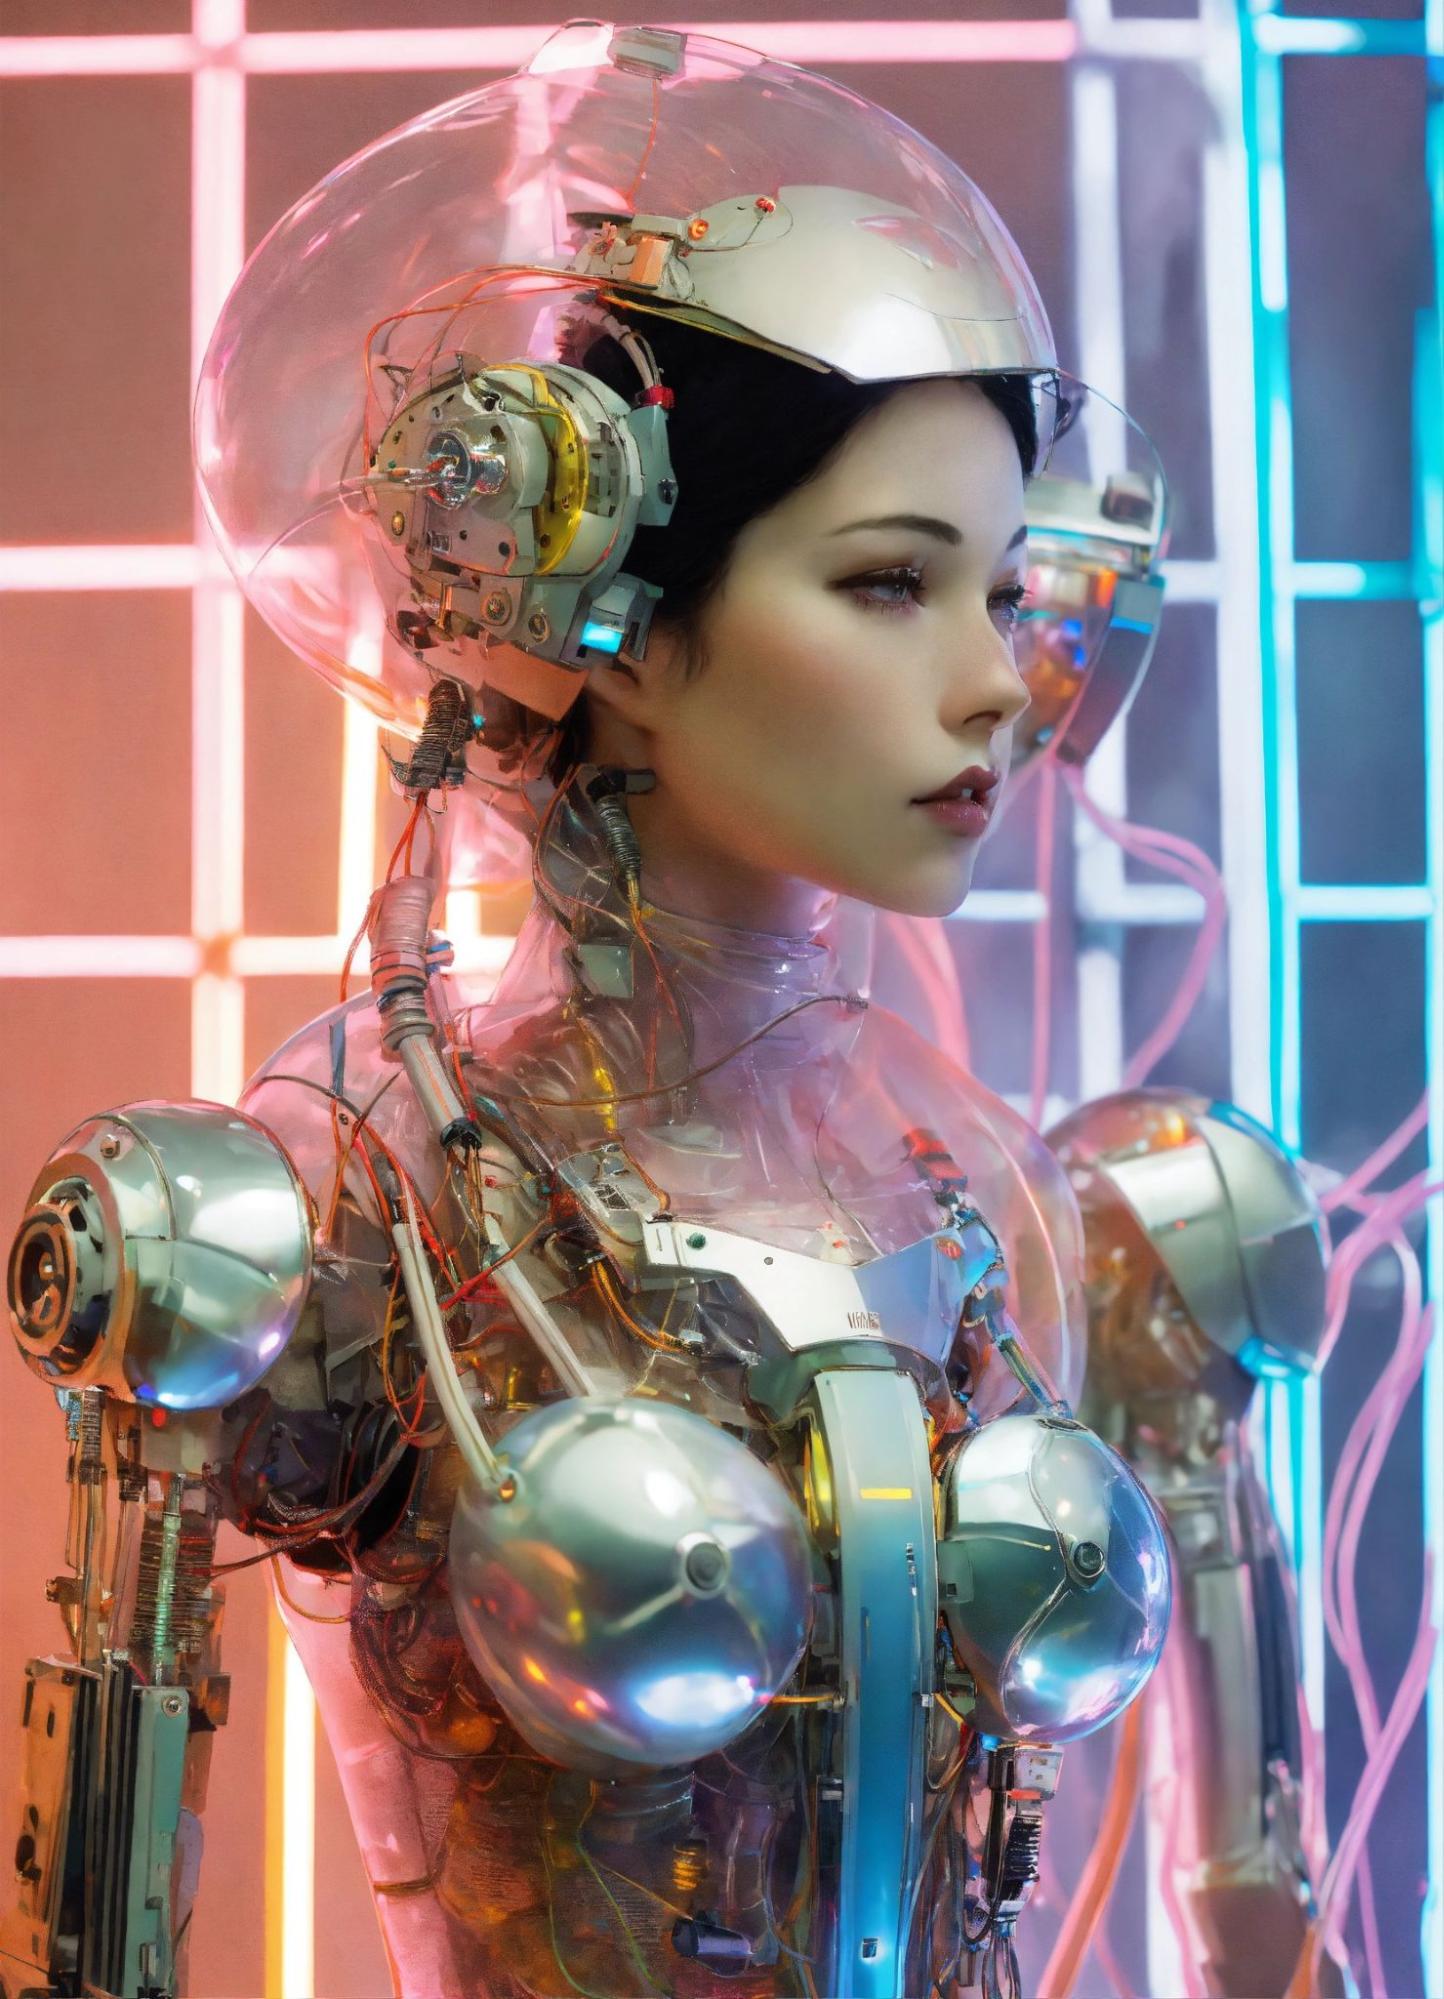 Cyborg astronaut woman